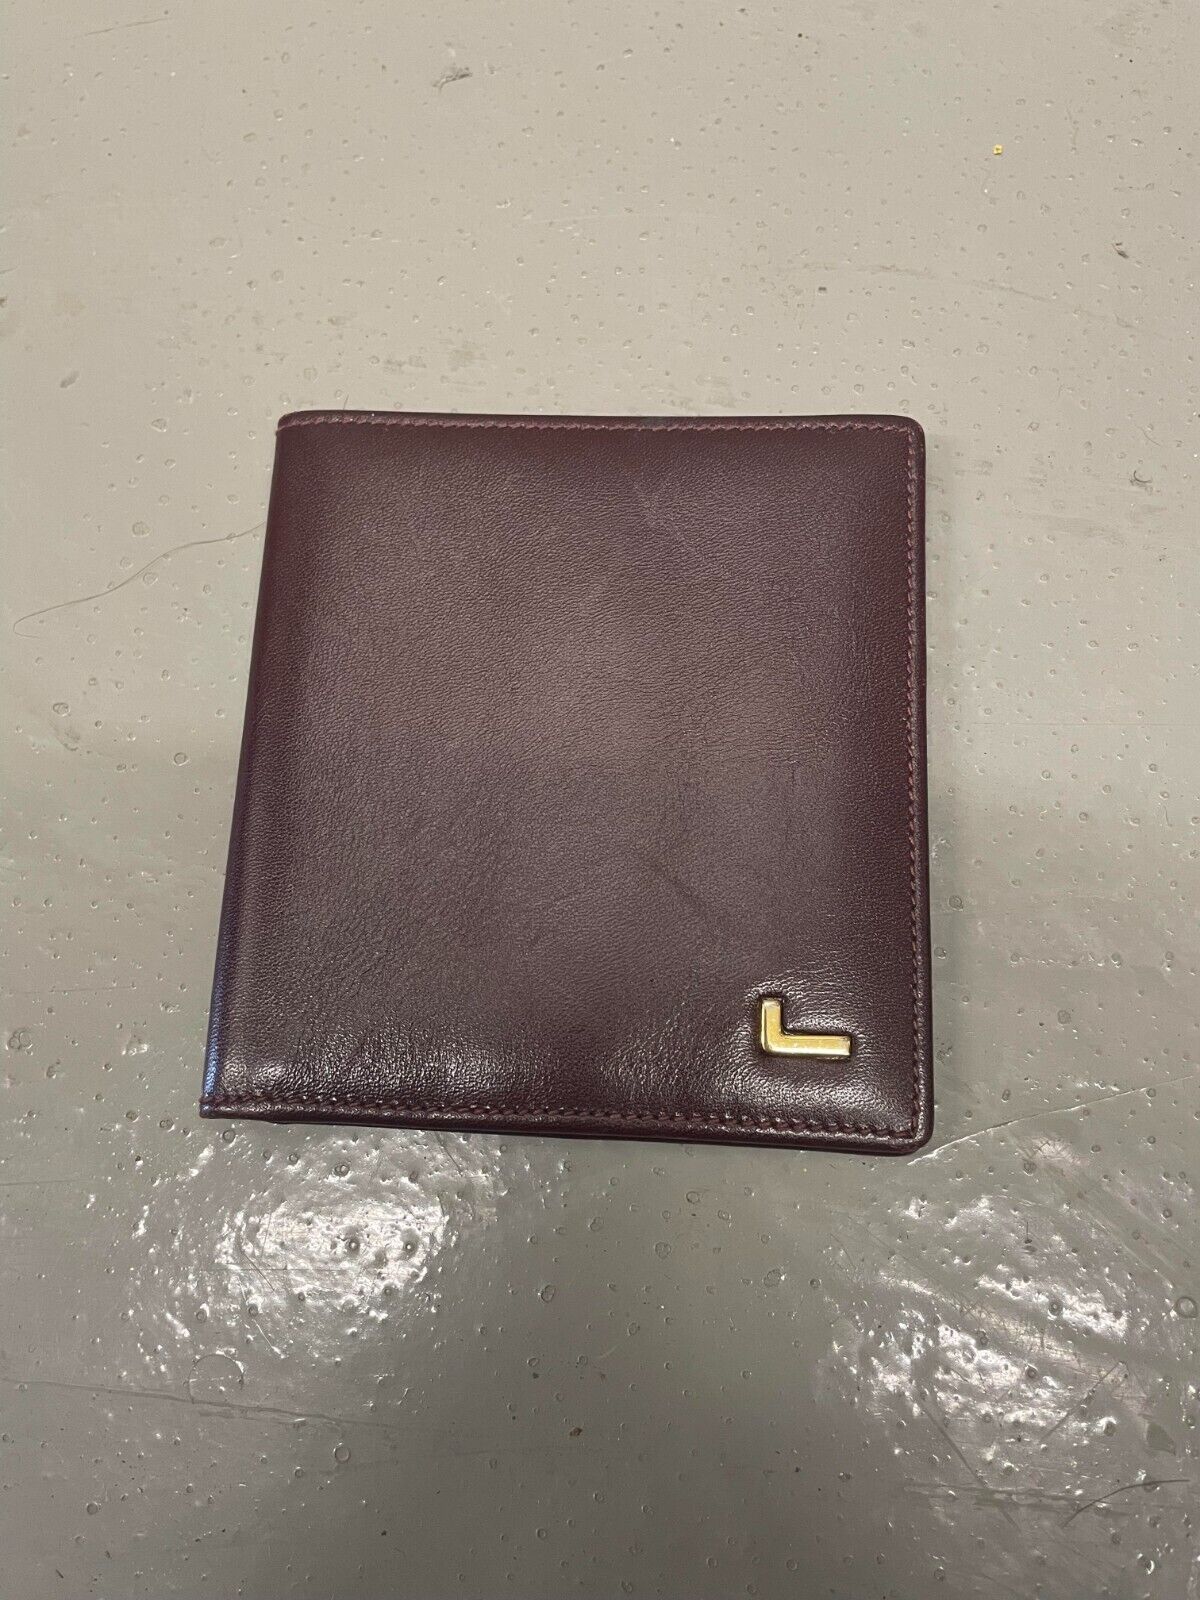 Lancel Men’s leather bifold Wallet - maroon - image 1